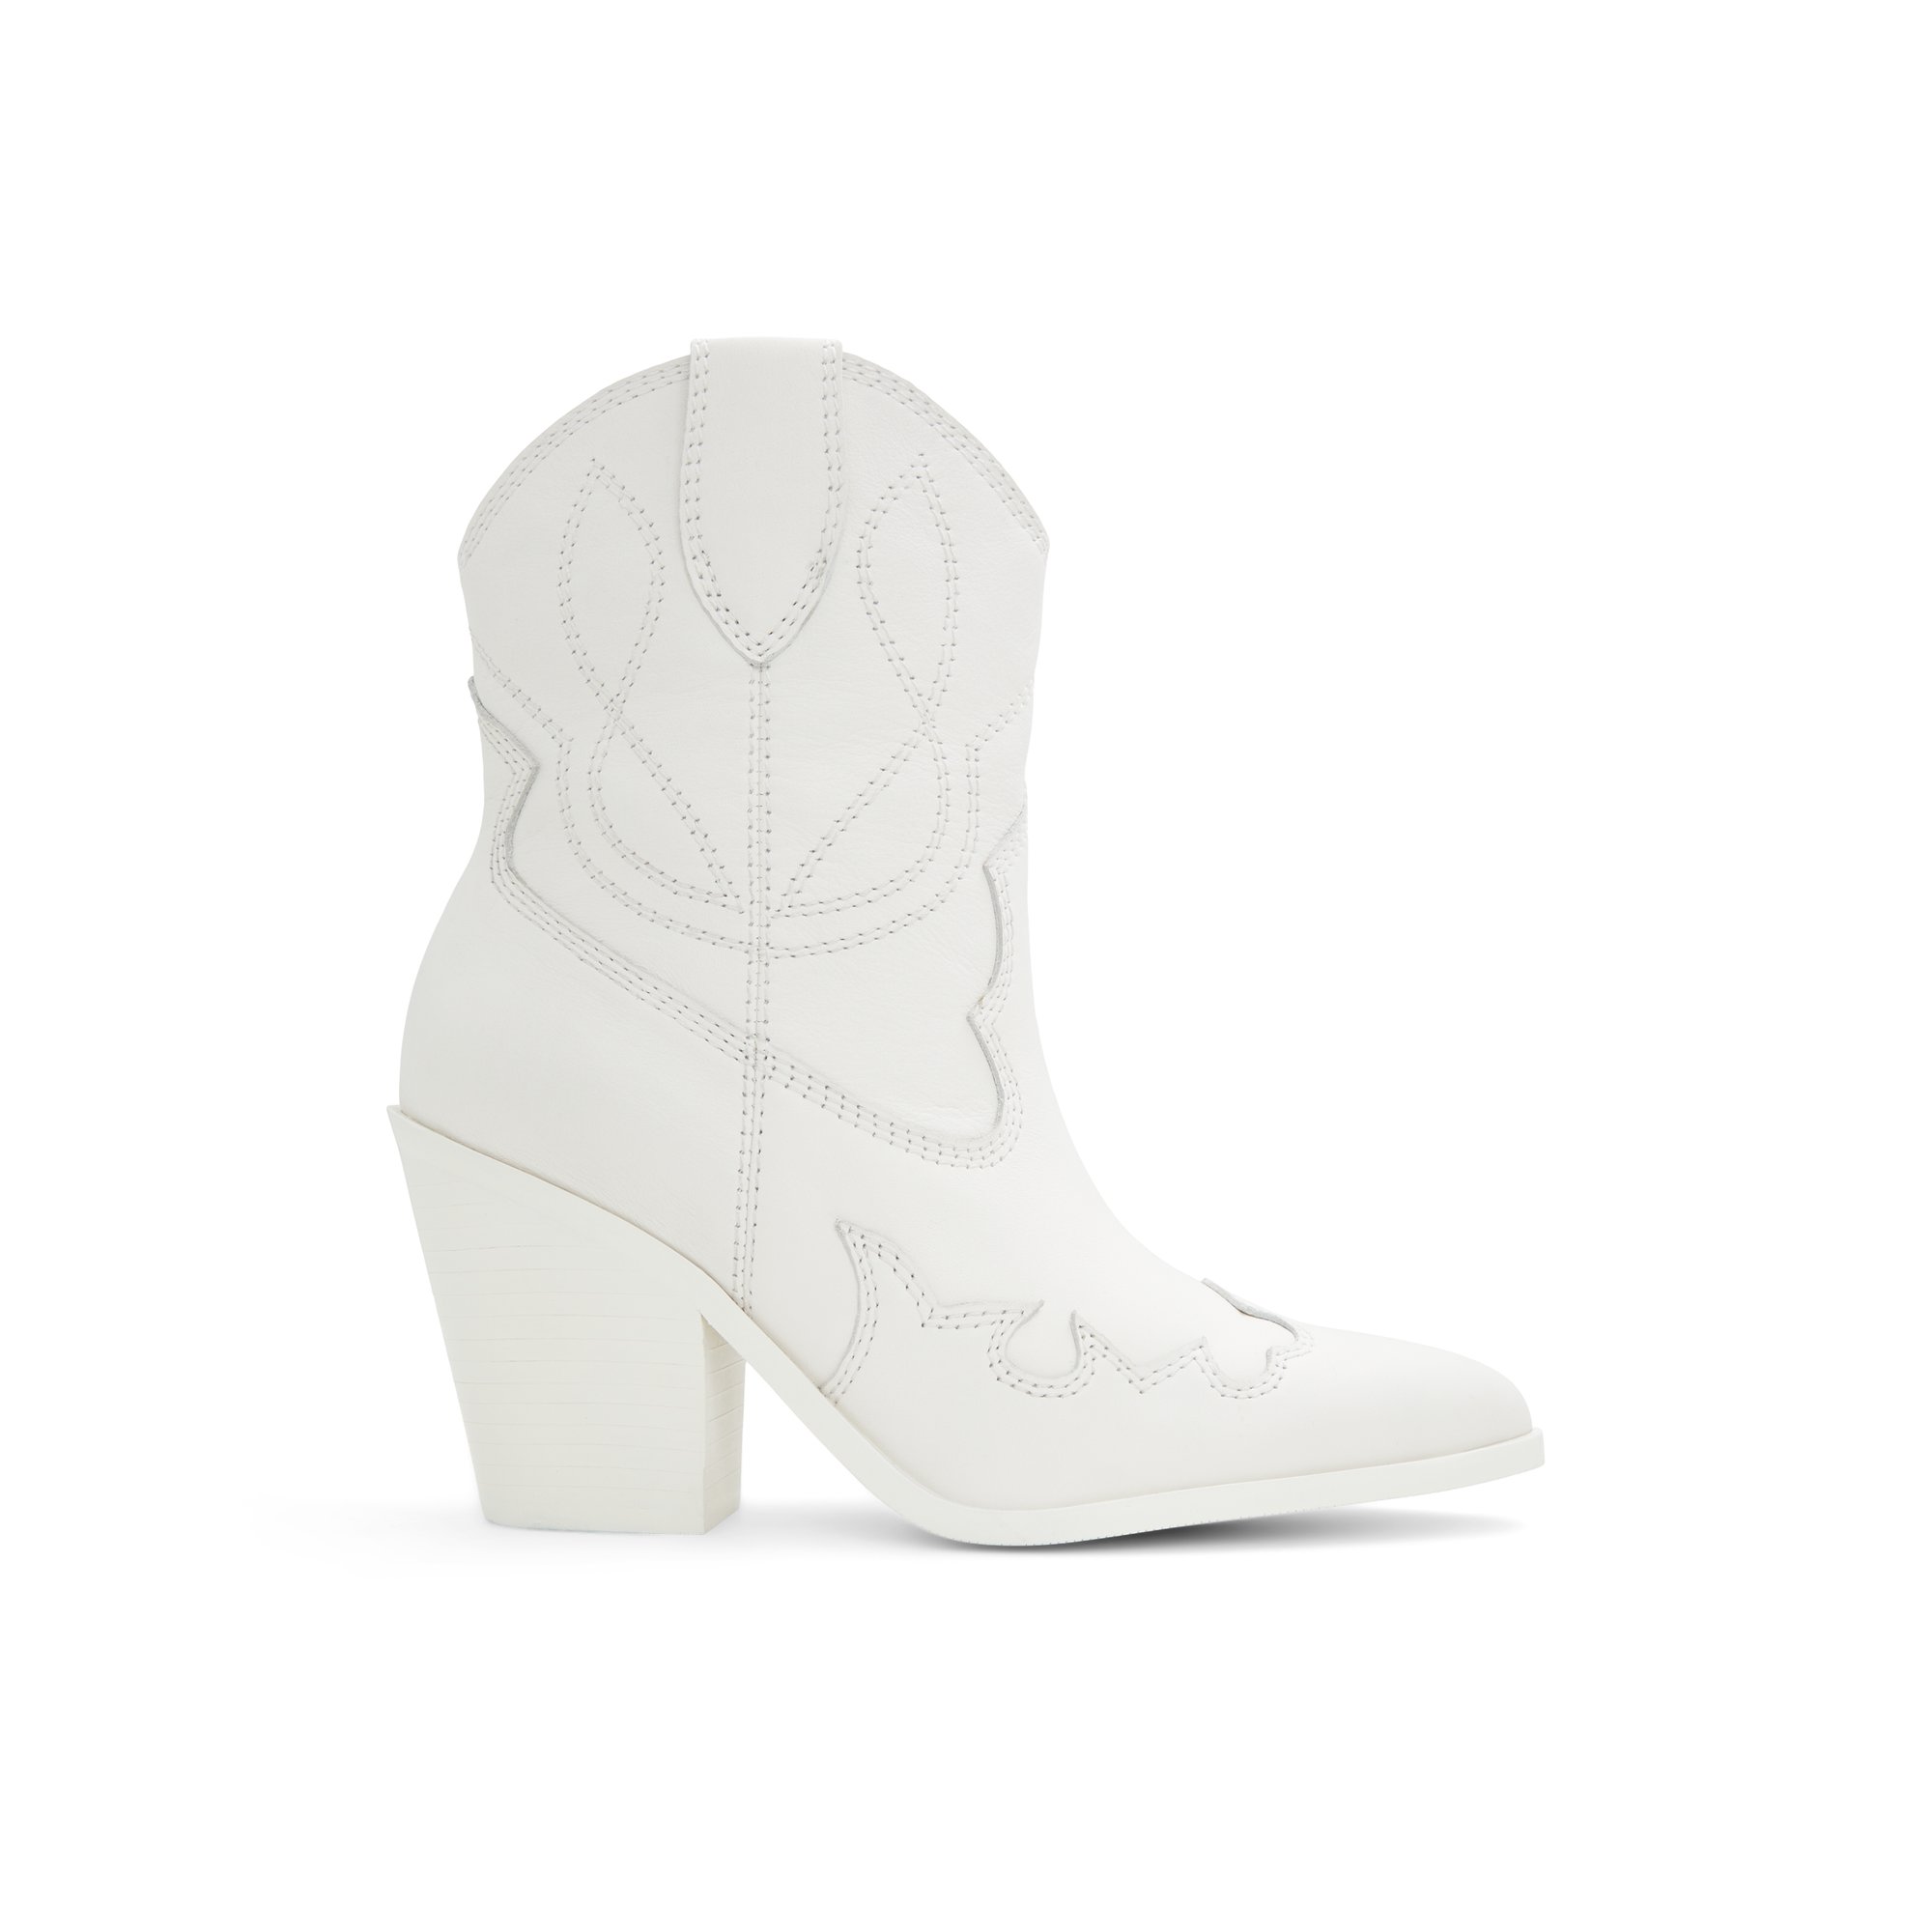 ALDO Nurodeo - Women's Ankle Boot - White